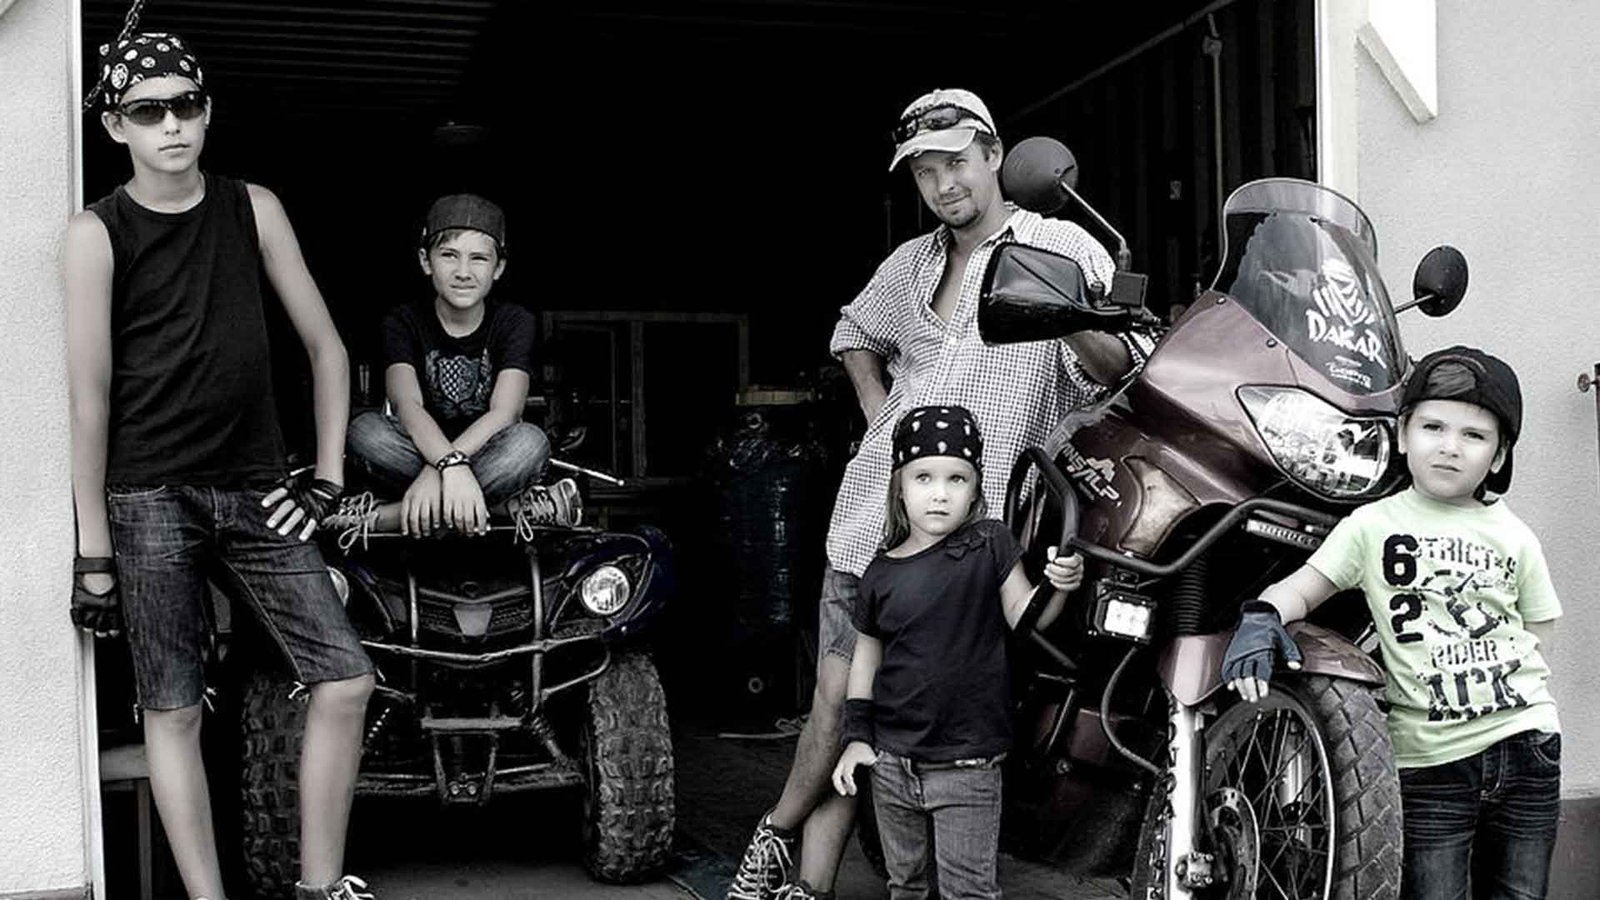 #family #bikergang #biker #ride #passion #rides